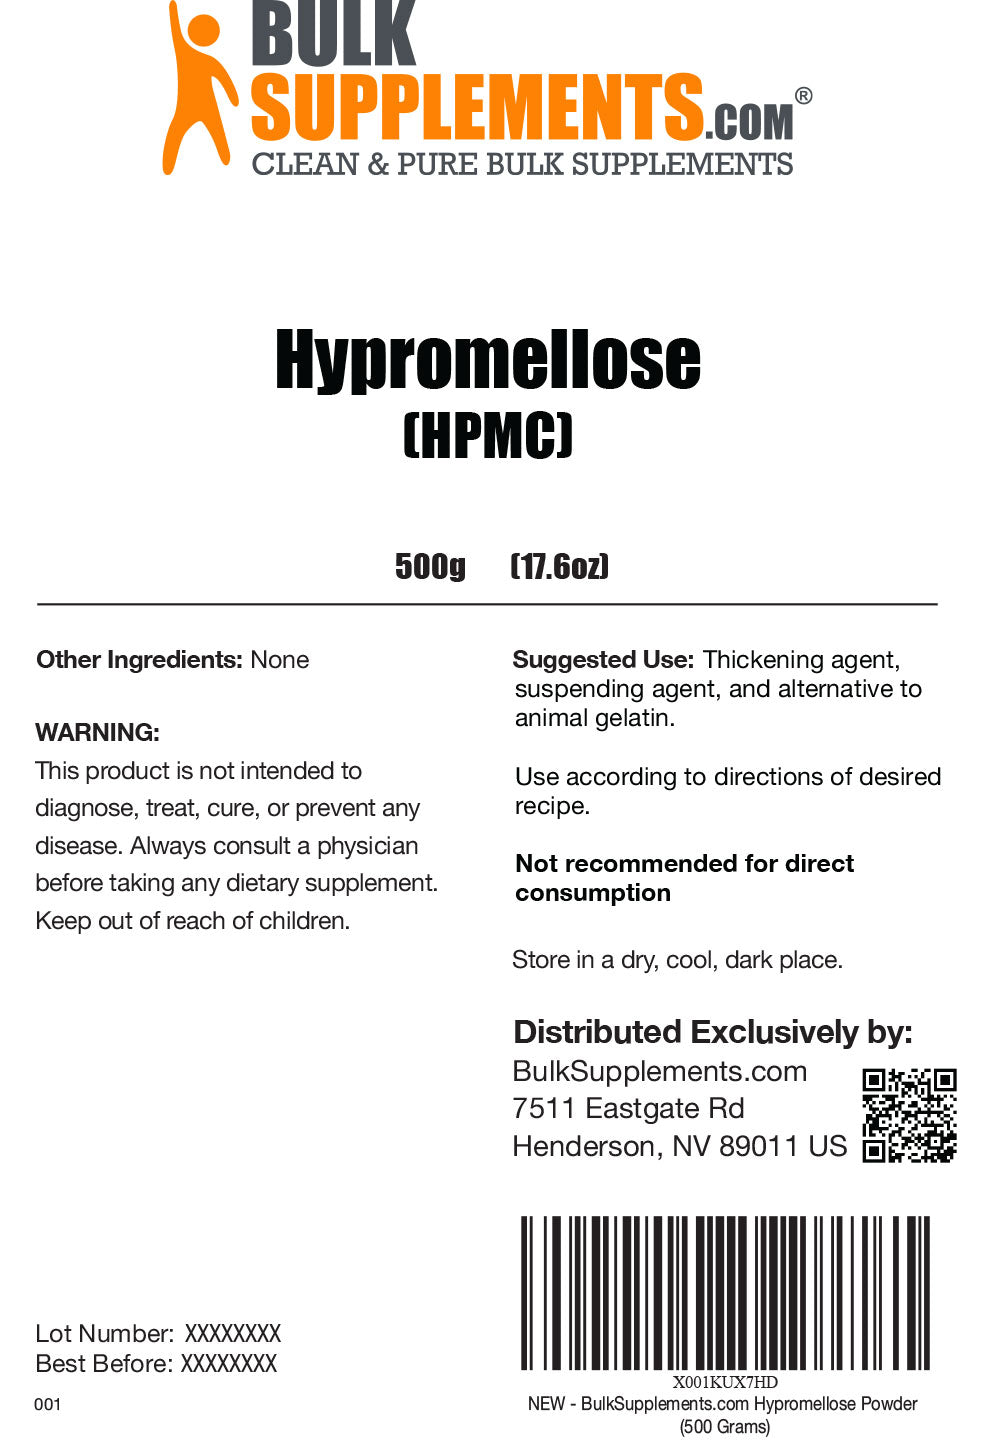 Hypromellose (HPMC) powder label 500g